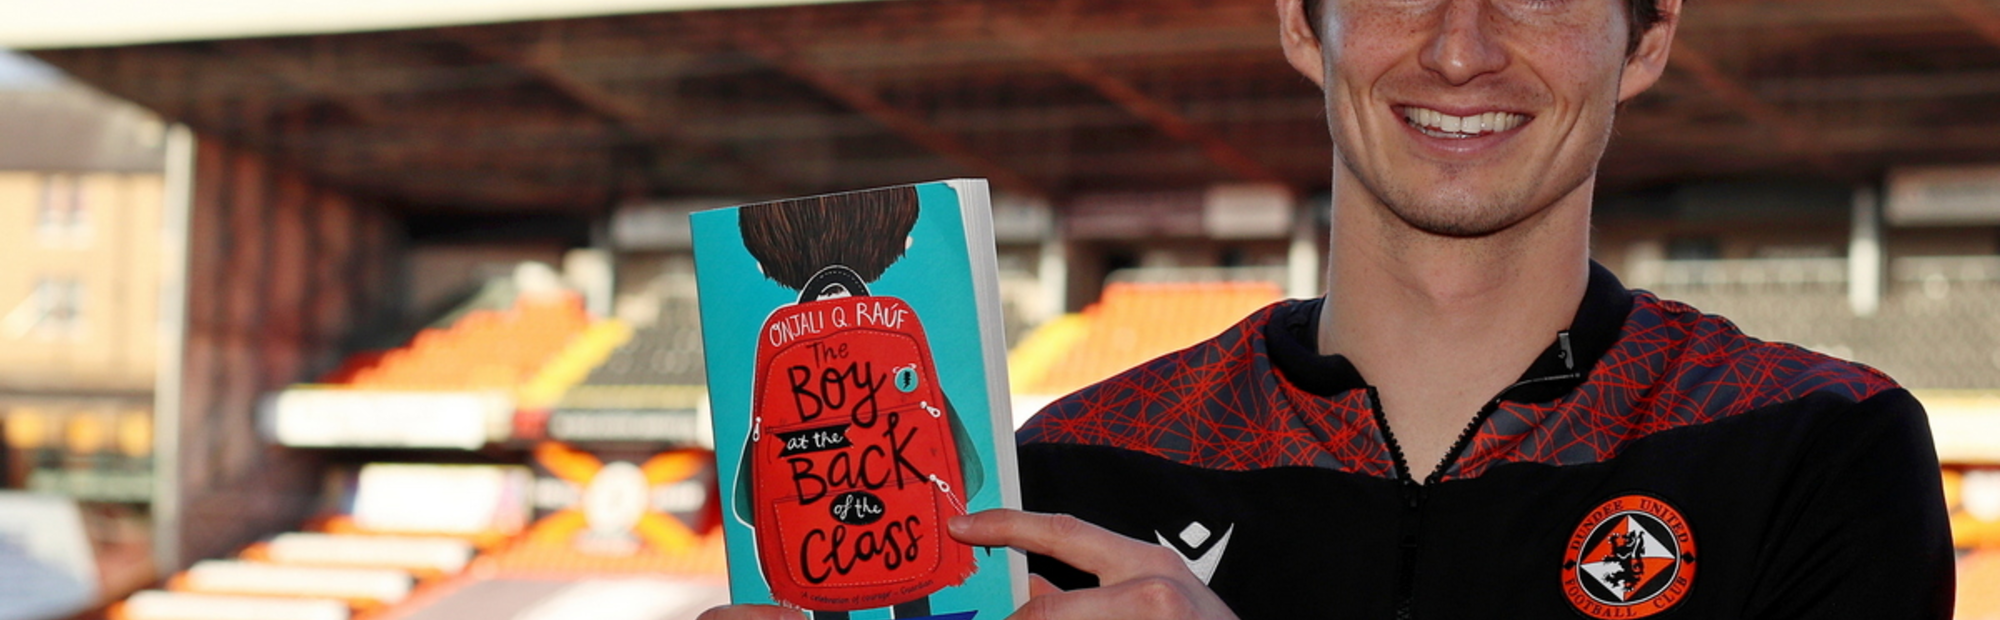 Ian Harkes reading Onjali Q. Raúf’s award-winning novel The Boy at the Back of the Class